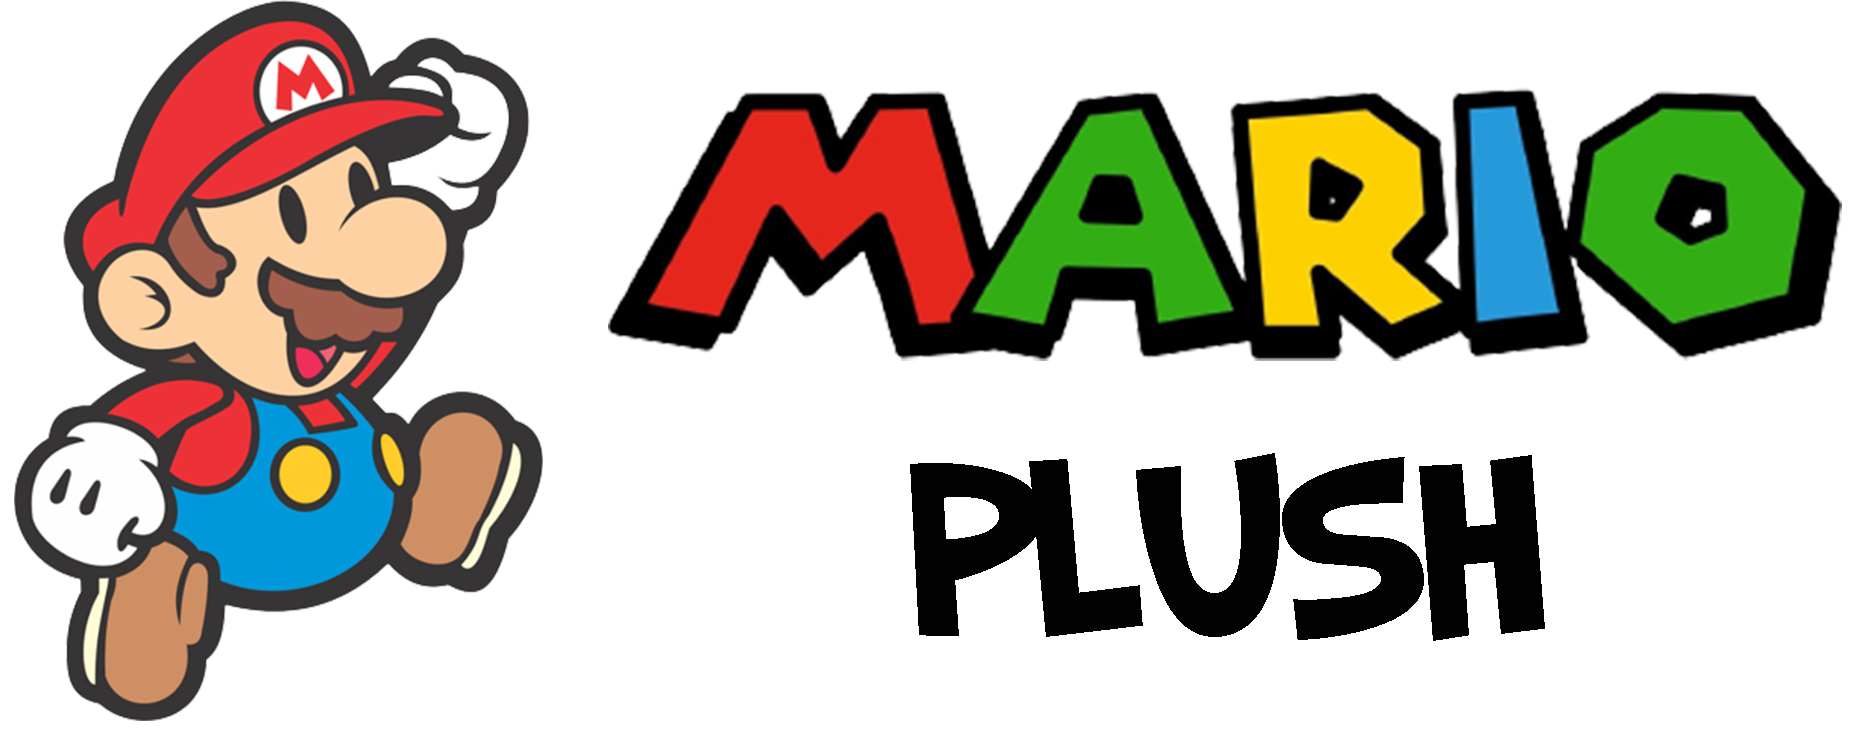 mario-plush-logo